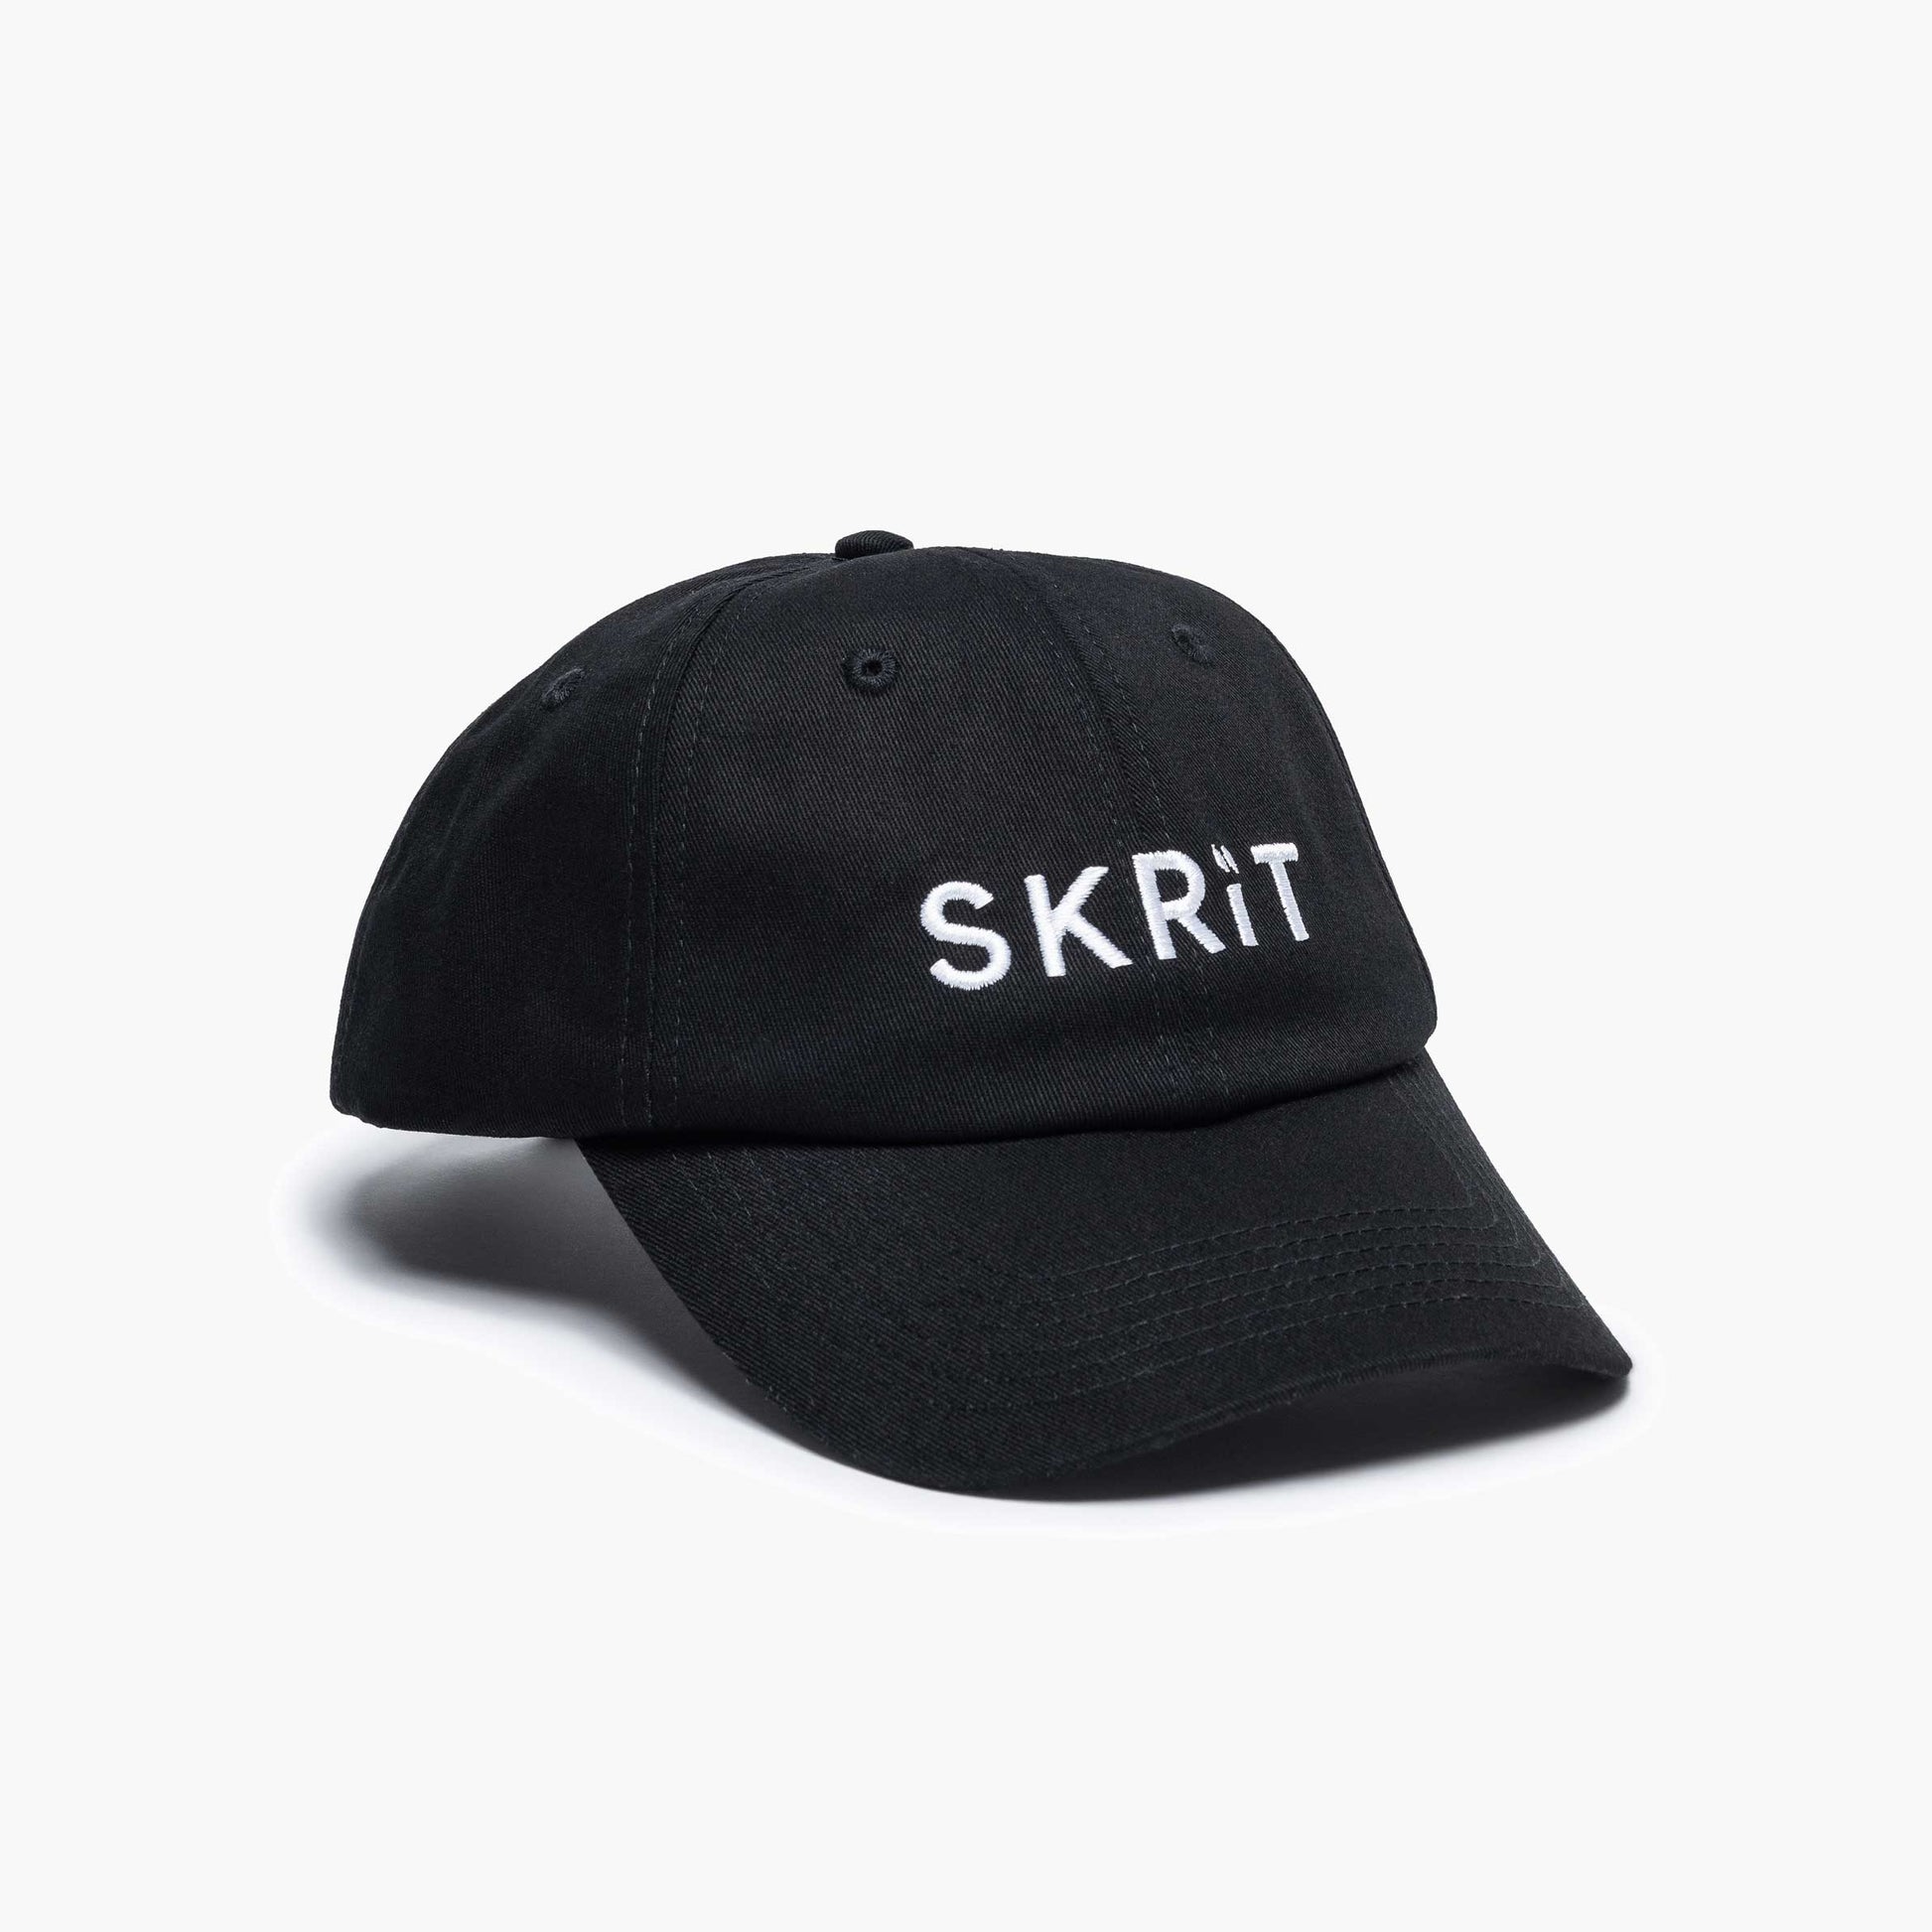 Black Cap - SKRIT